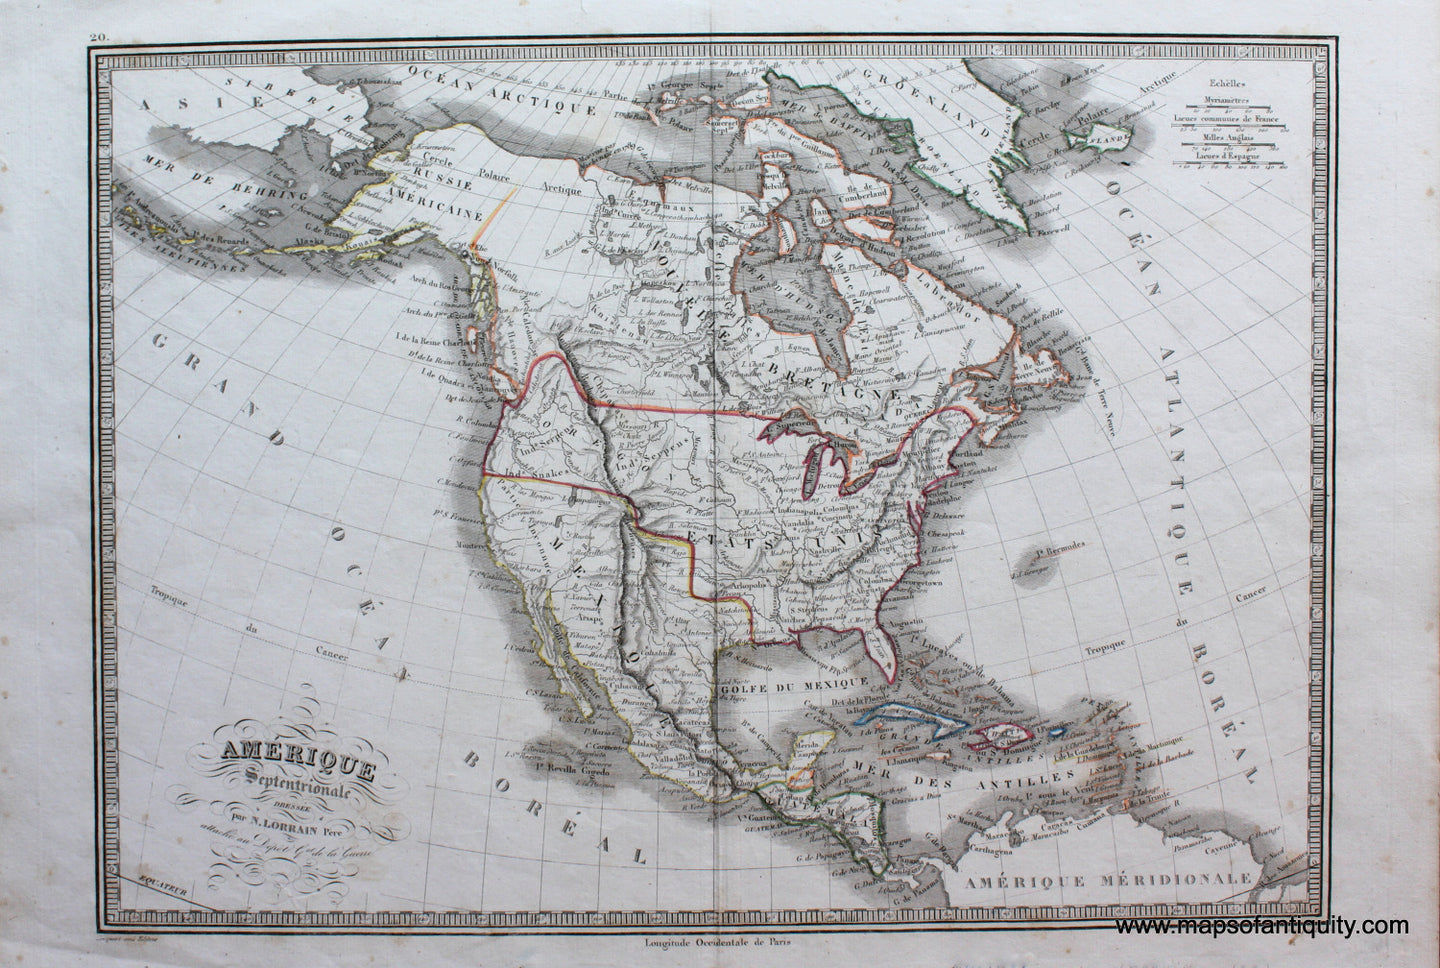 Antique-Hand-Colored-Map-Amerique-Septentionale-North-America-in-1837-**********-North-America-North-America-General-1837-N.-Lorrain-Maps-Of-Antiquity